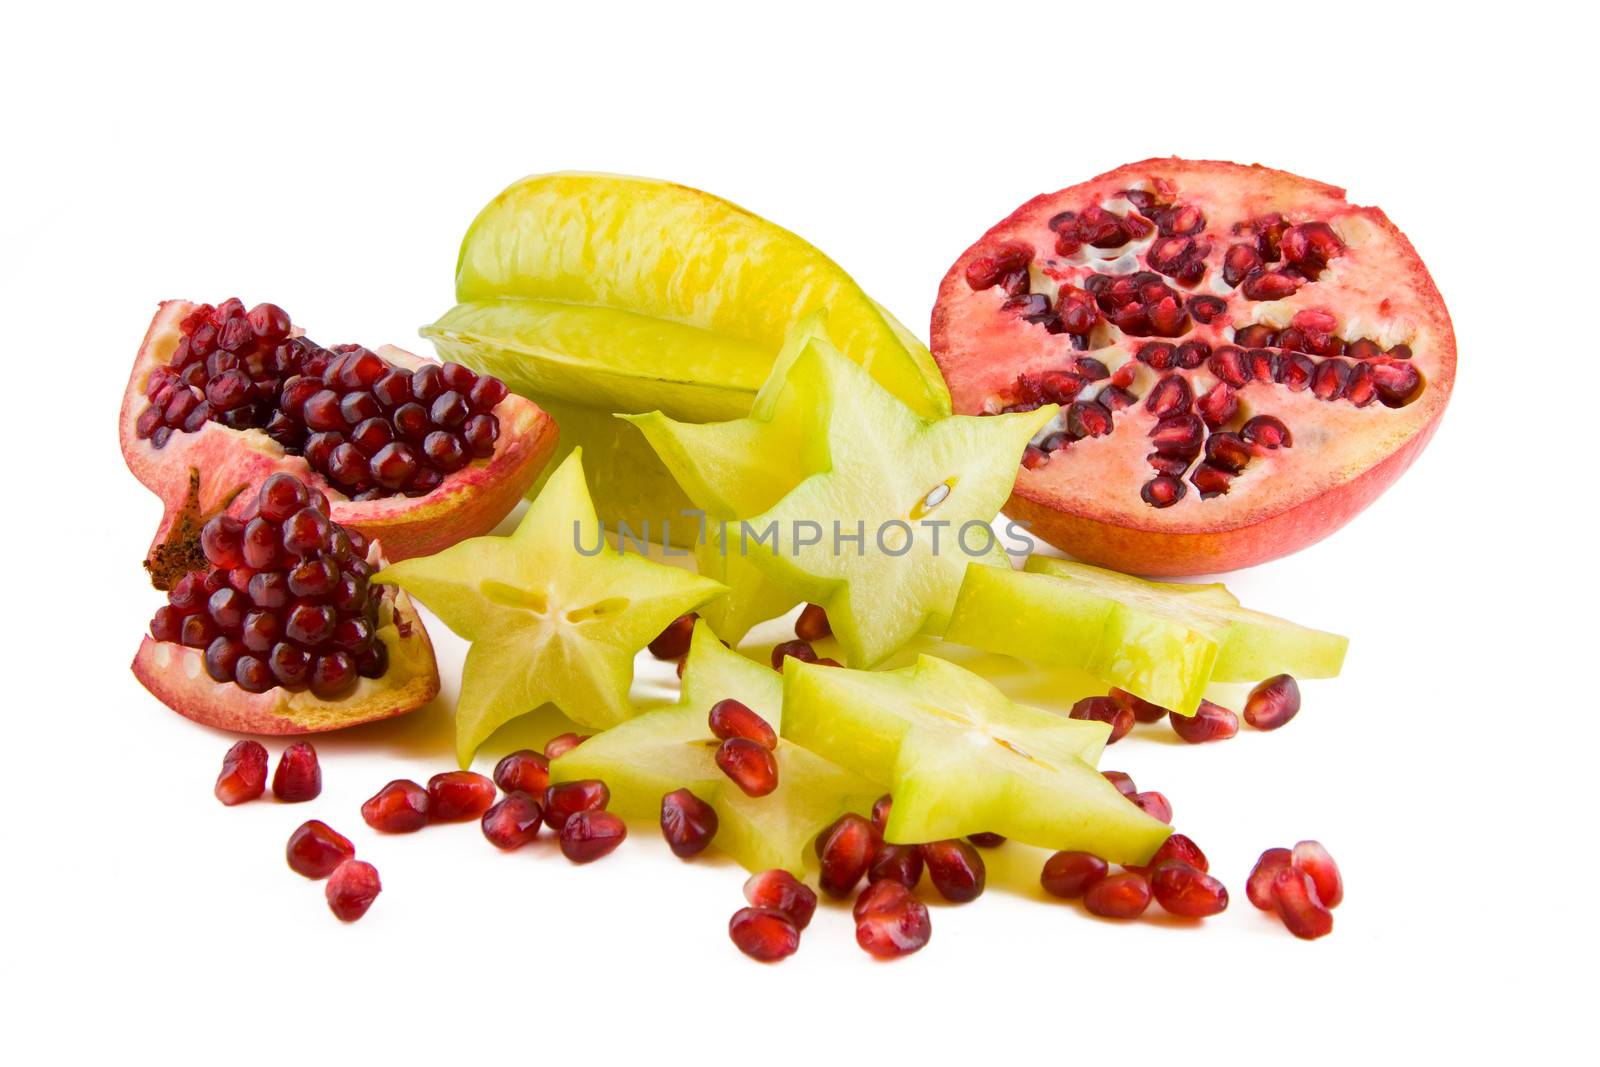 Pomegranate and carambola by Gbuglok